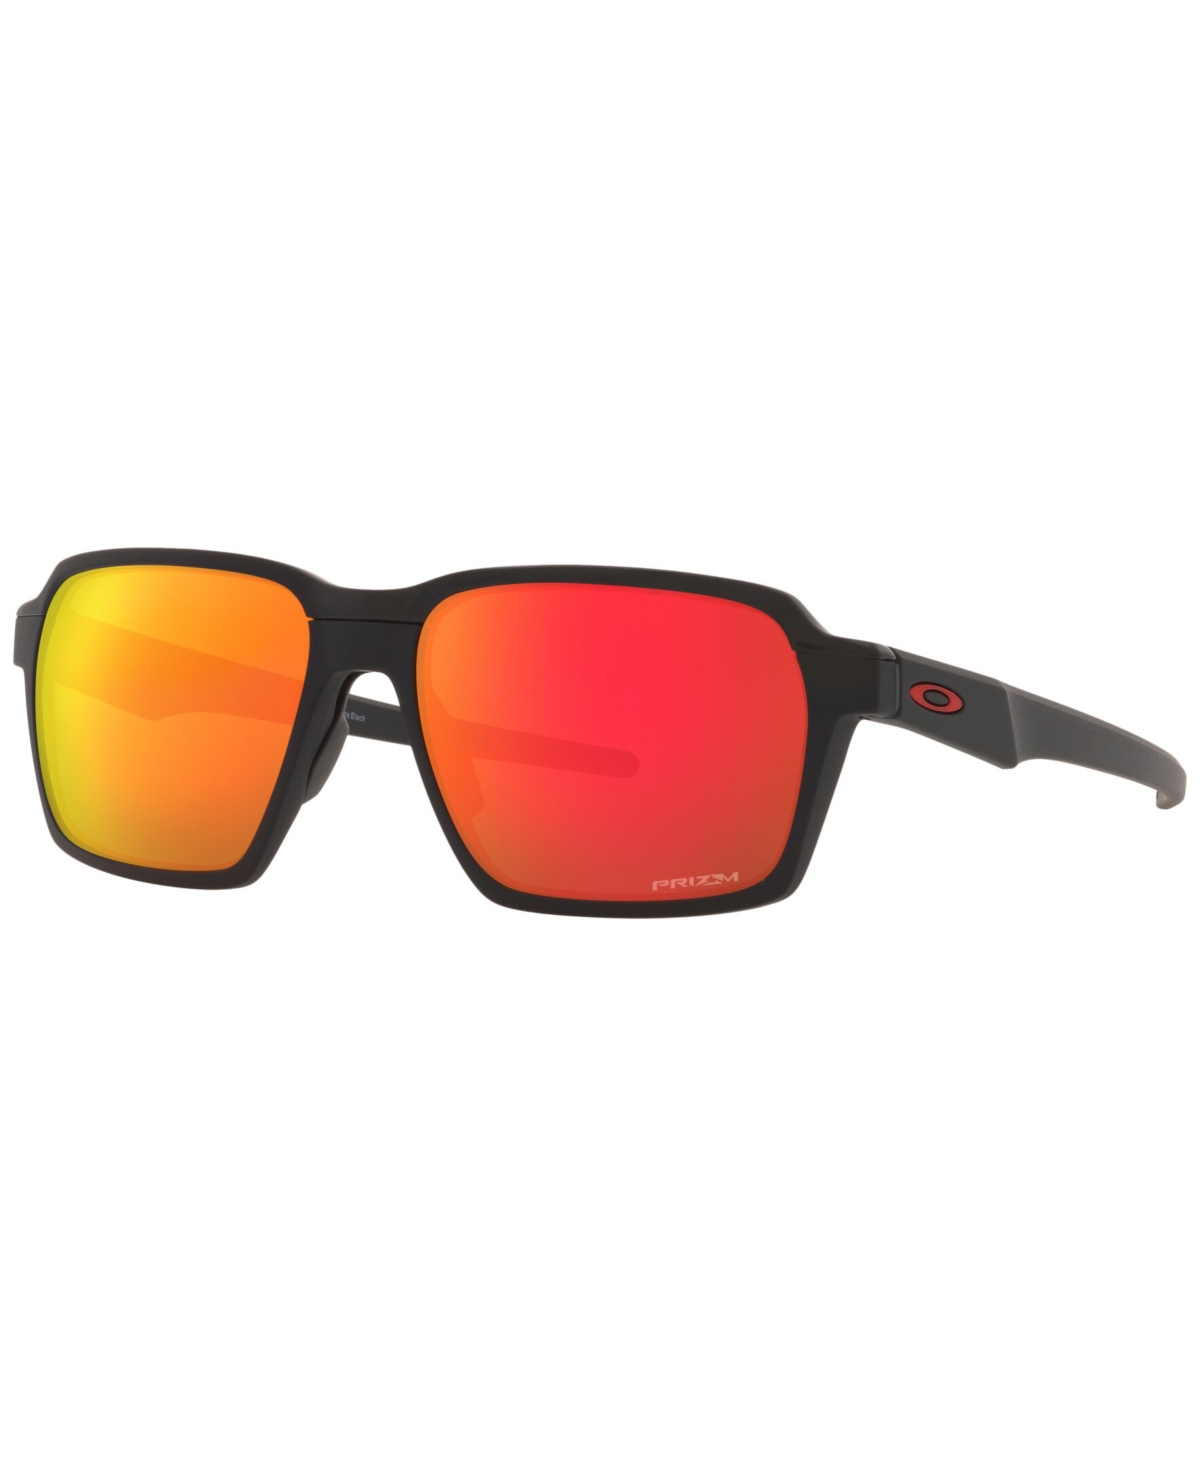 Men's Sunglasses, OO4143 Parlay 58 - Matte Black